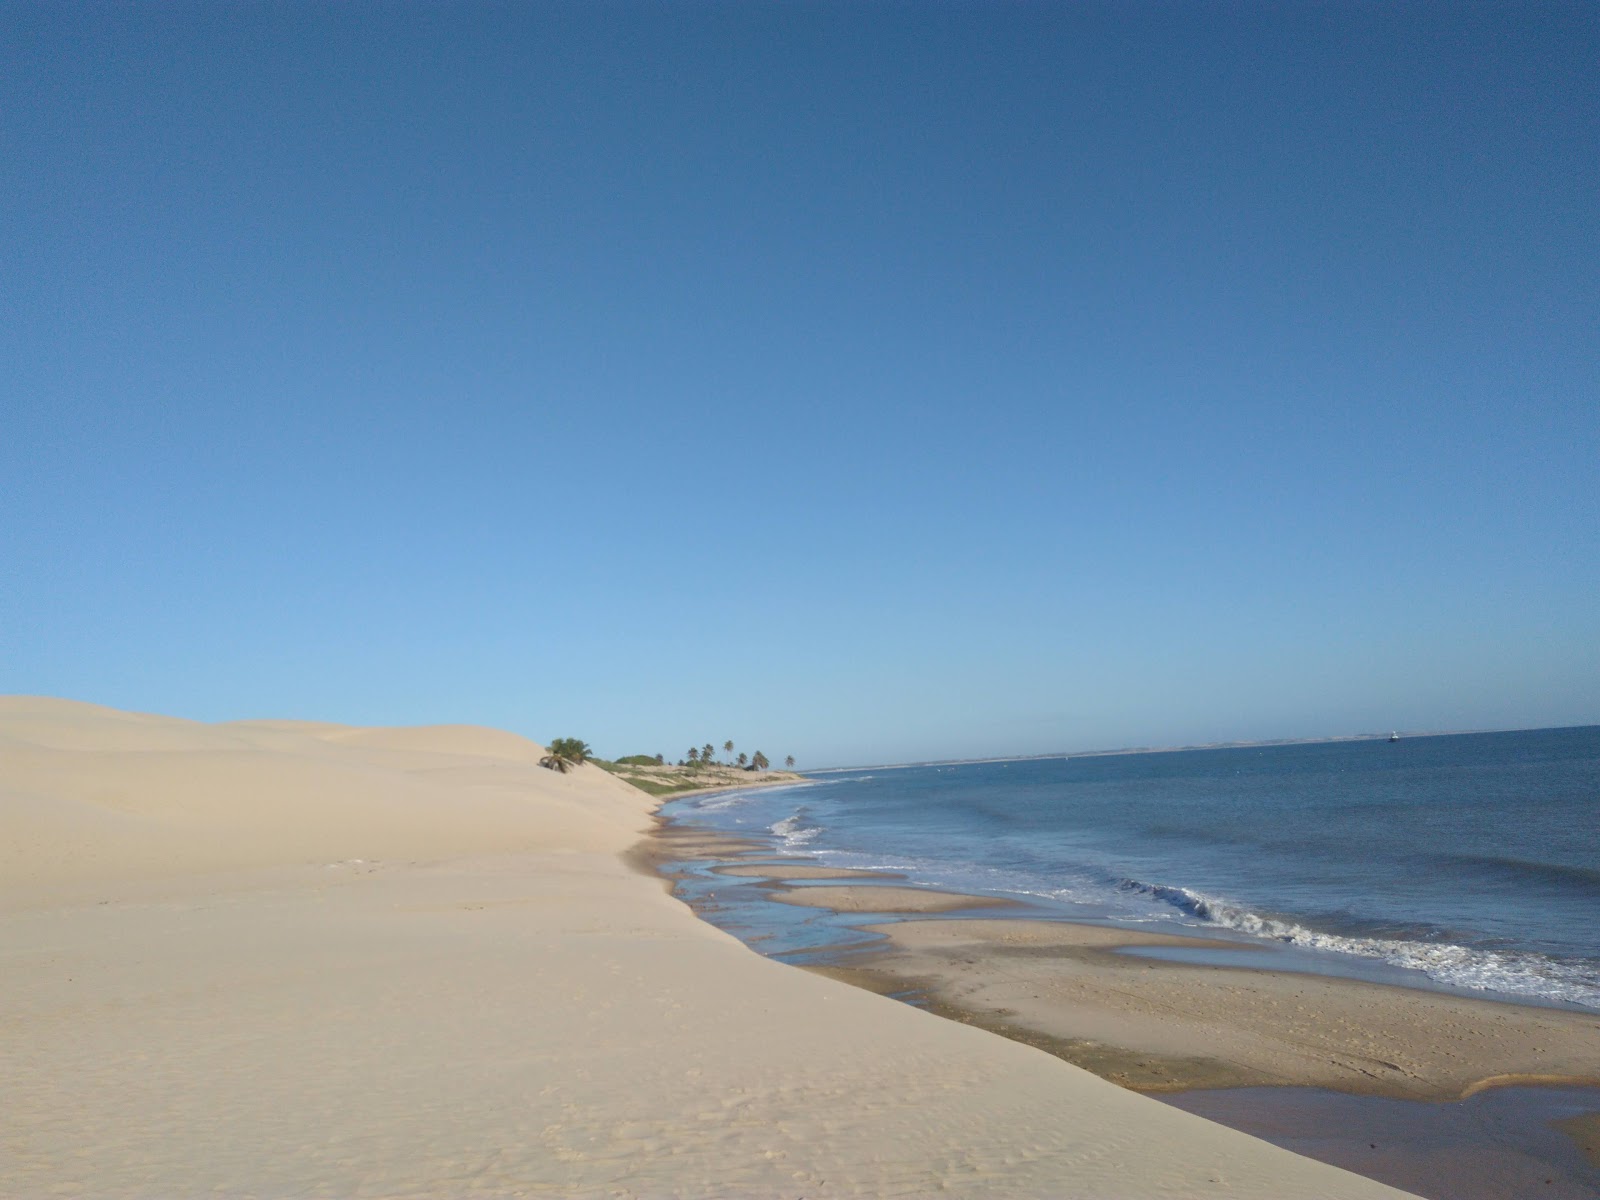 Foto af Praia Das Almas. vildt område